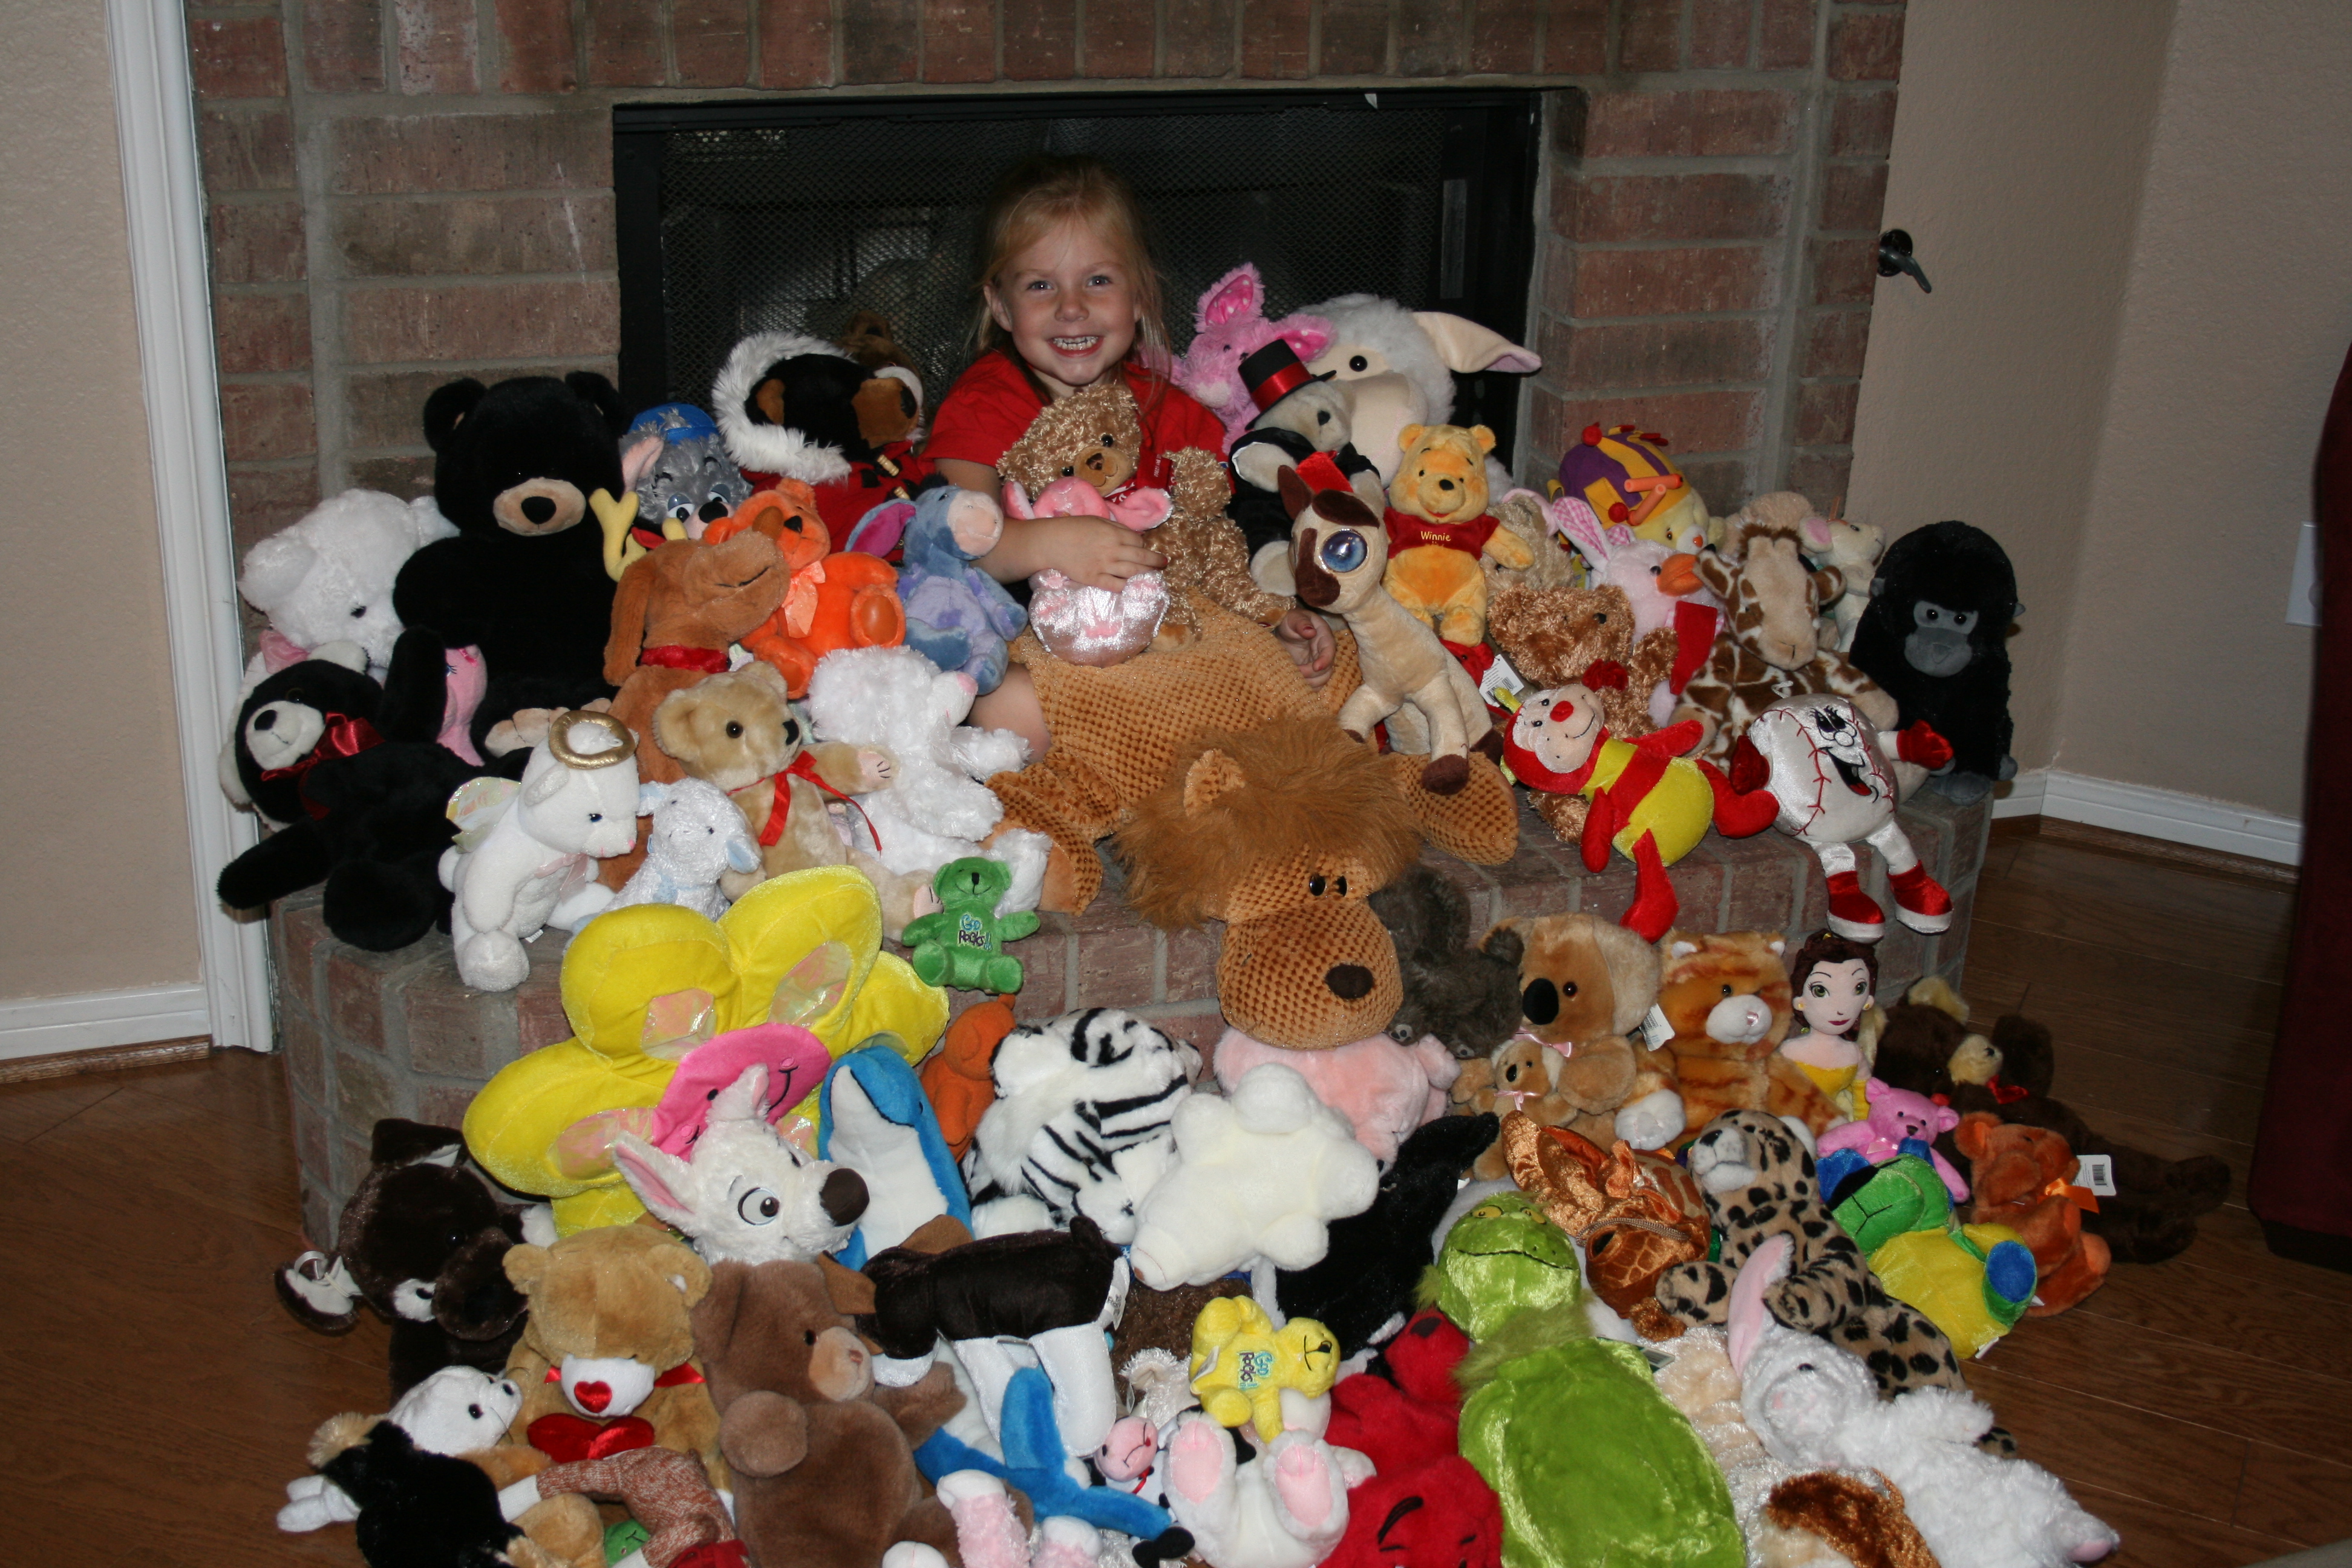 donating stuffed animals